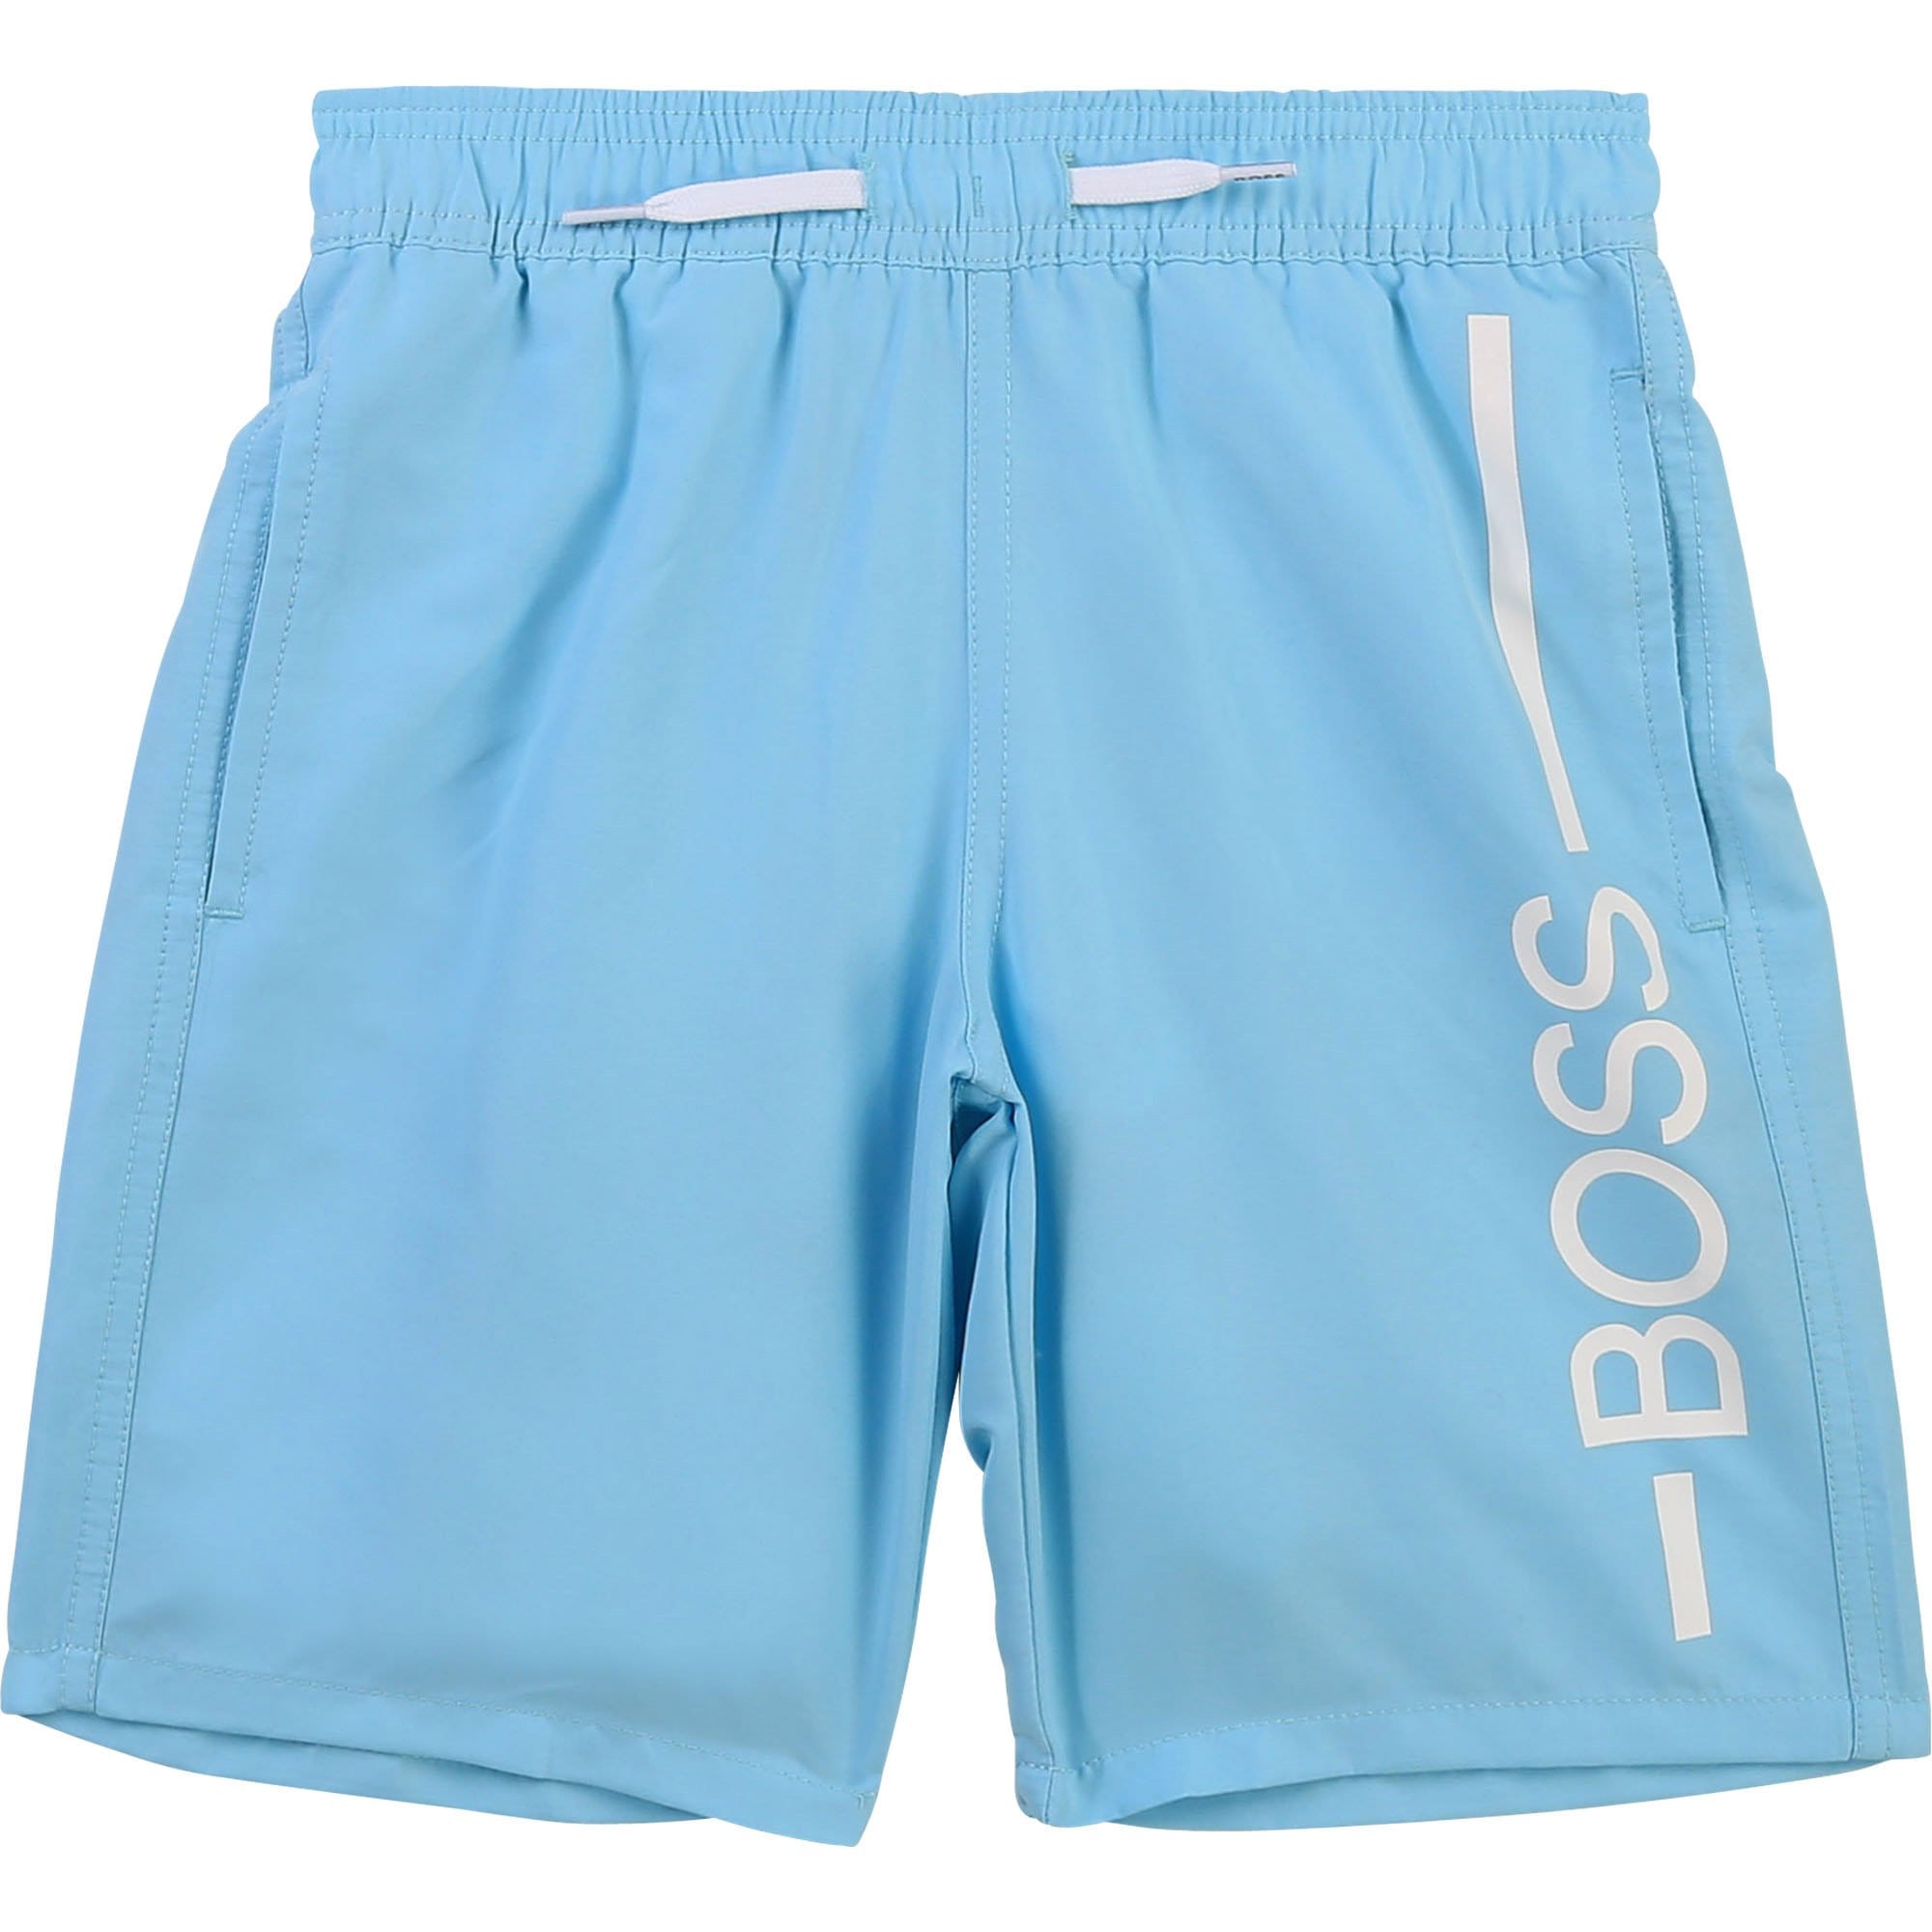 HUGO BOSS - Swim Short - Turquoise